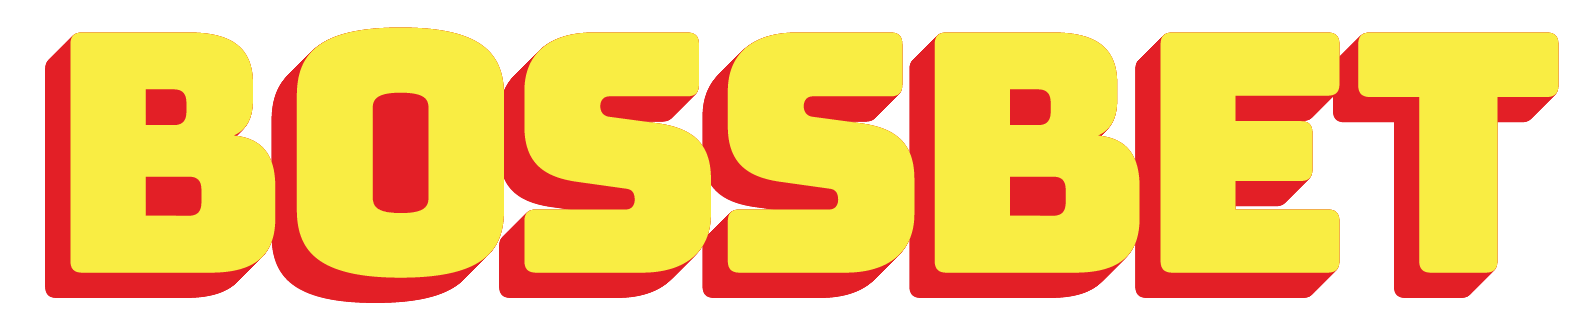 BossBet logo